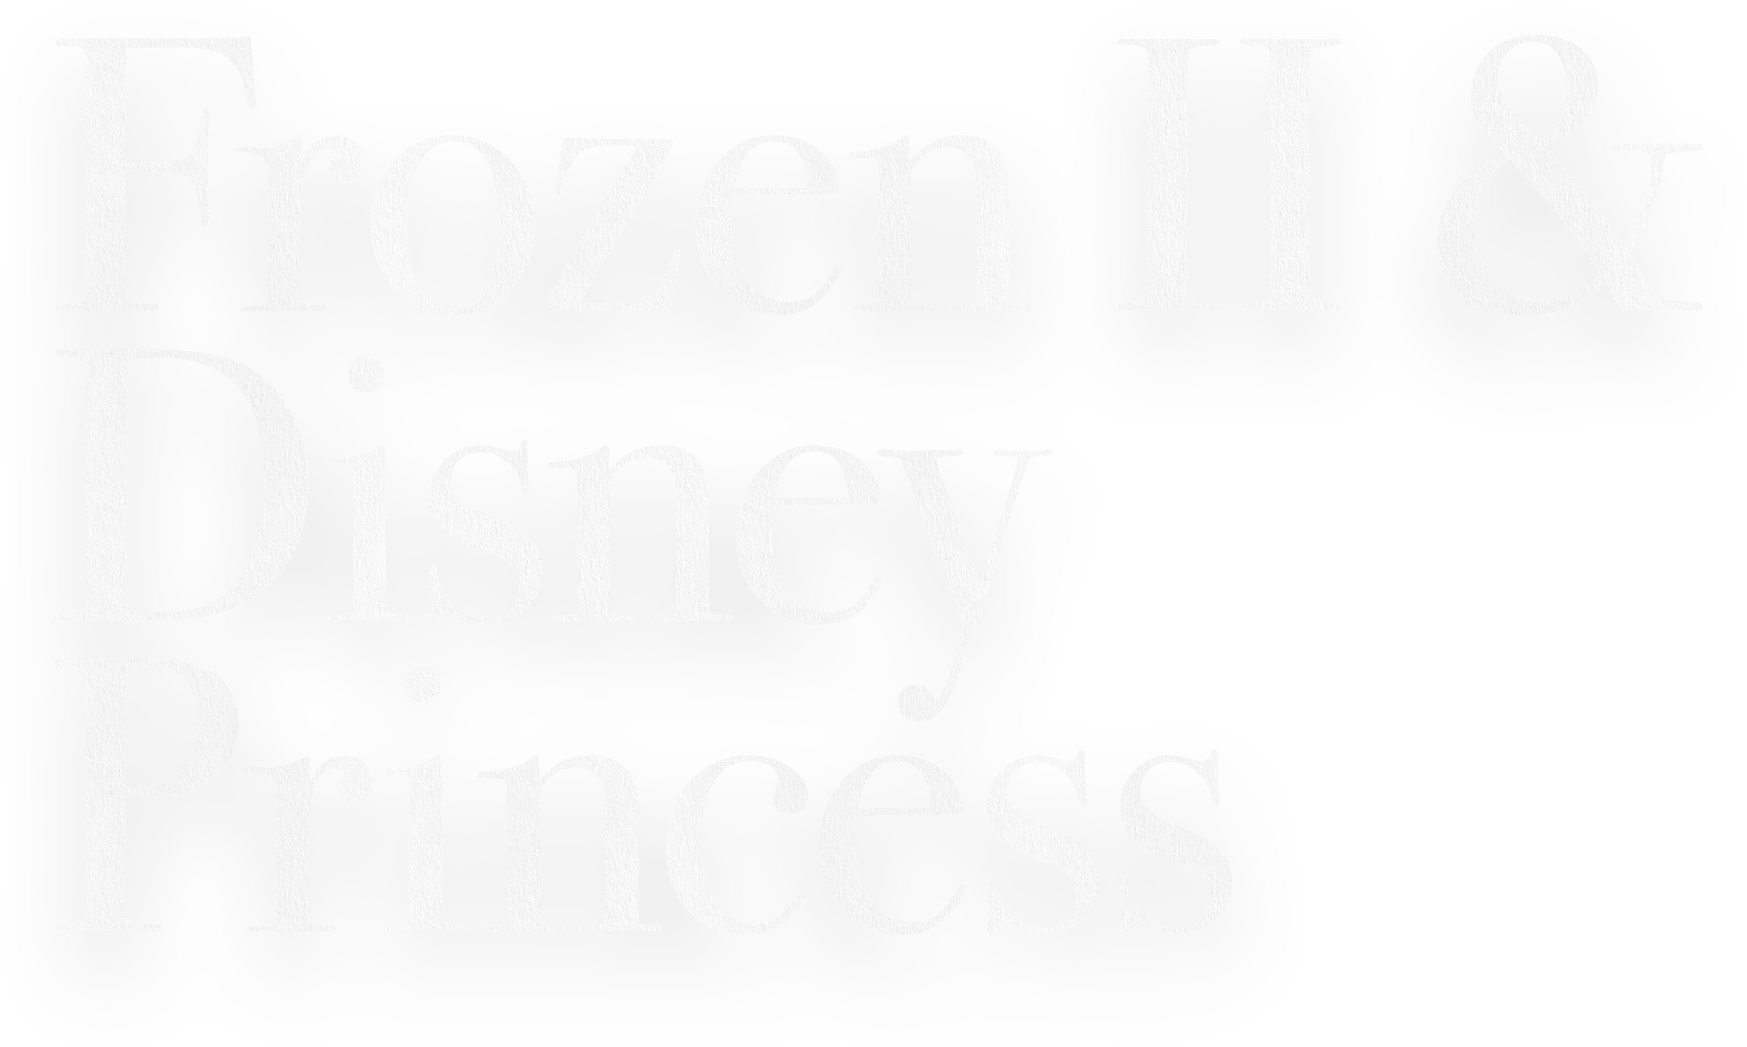 Frozen II & Disney Princess」 スペシャルシリーズ | CITIZEN L 